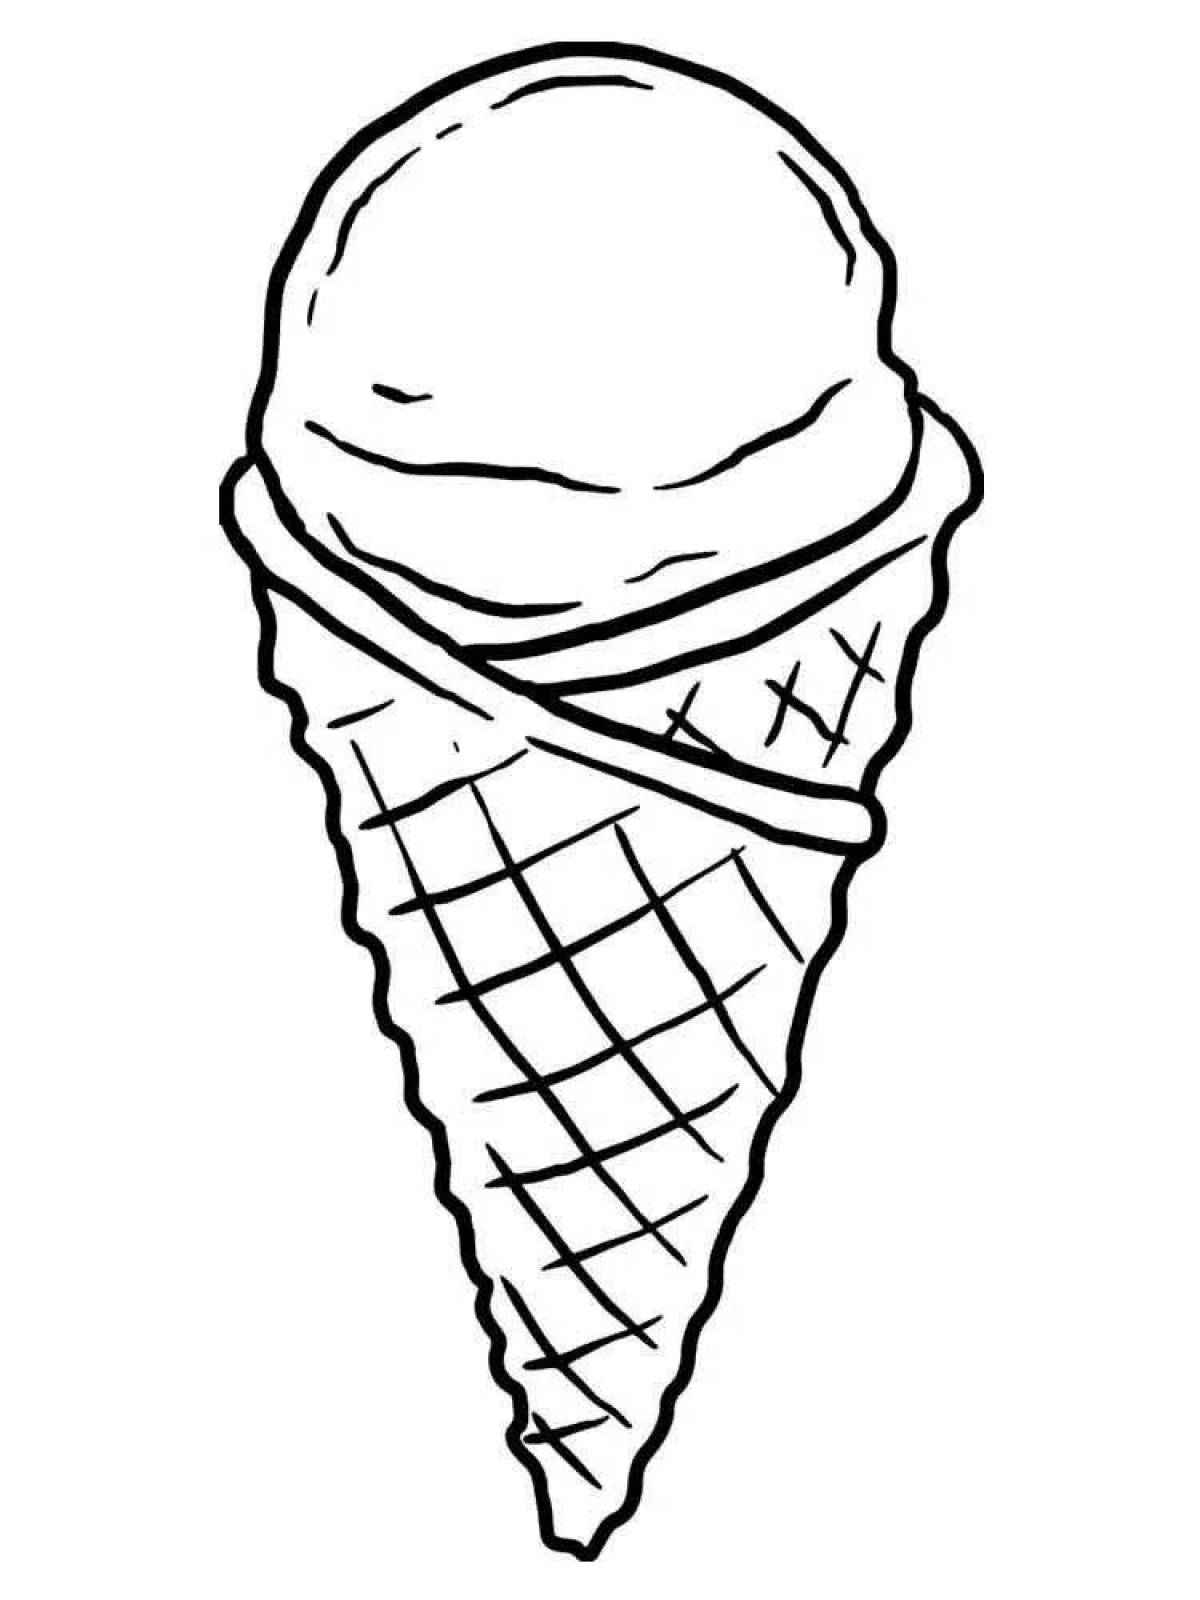 Color splash ice cream cone coloring page